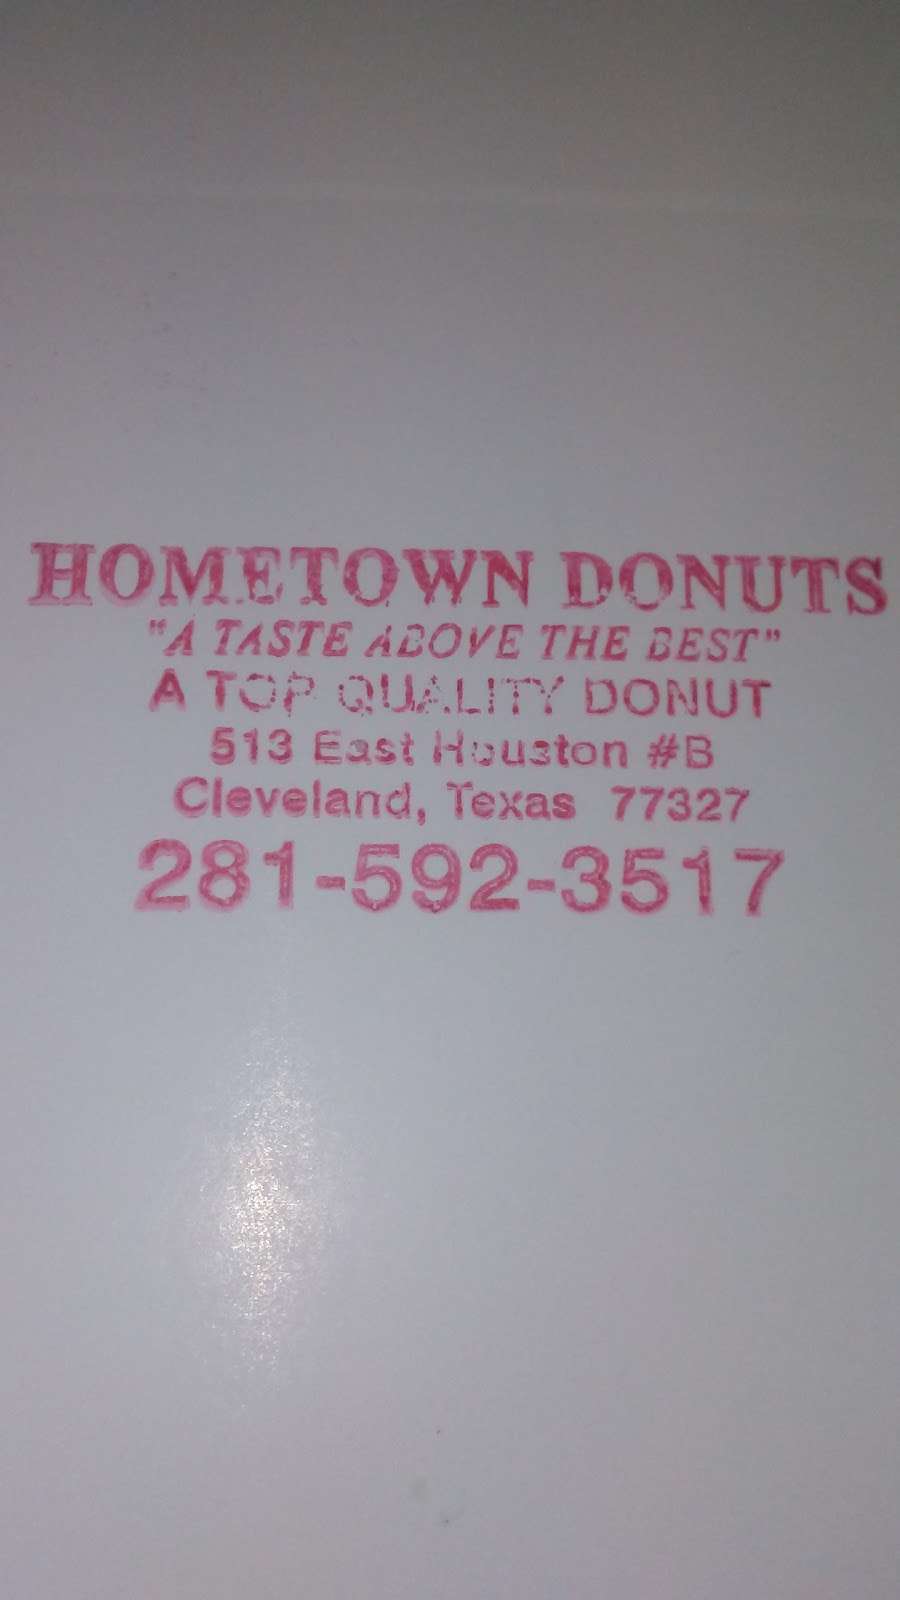 Hometown Donuts - bakery  | Photo 2 of 3 | Address: 513 E Houston St # B, Cleveland, TX 77327, USA | Phone: (281) 592-3517